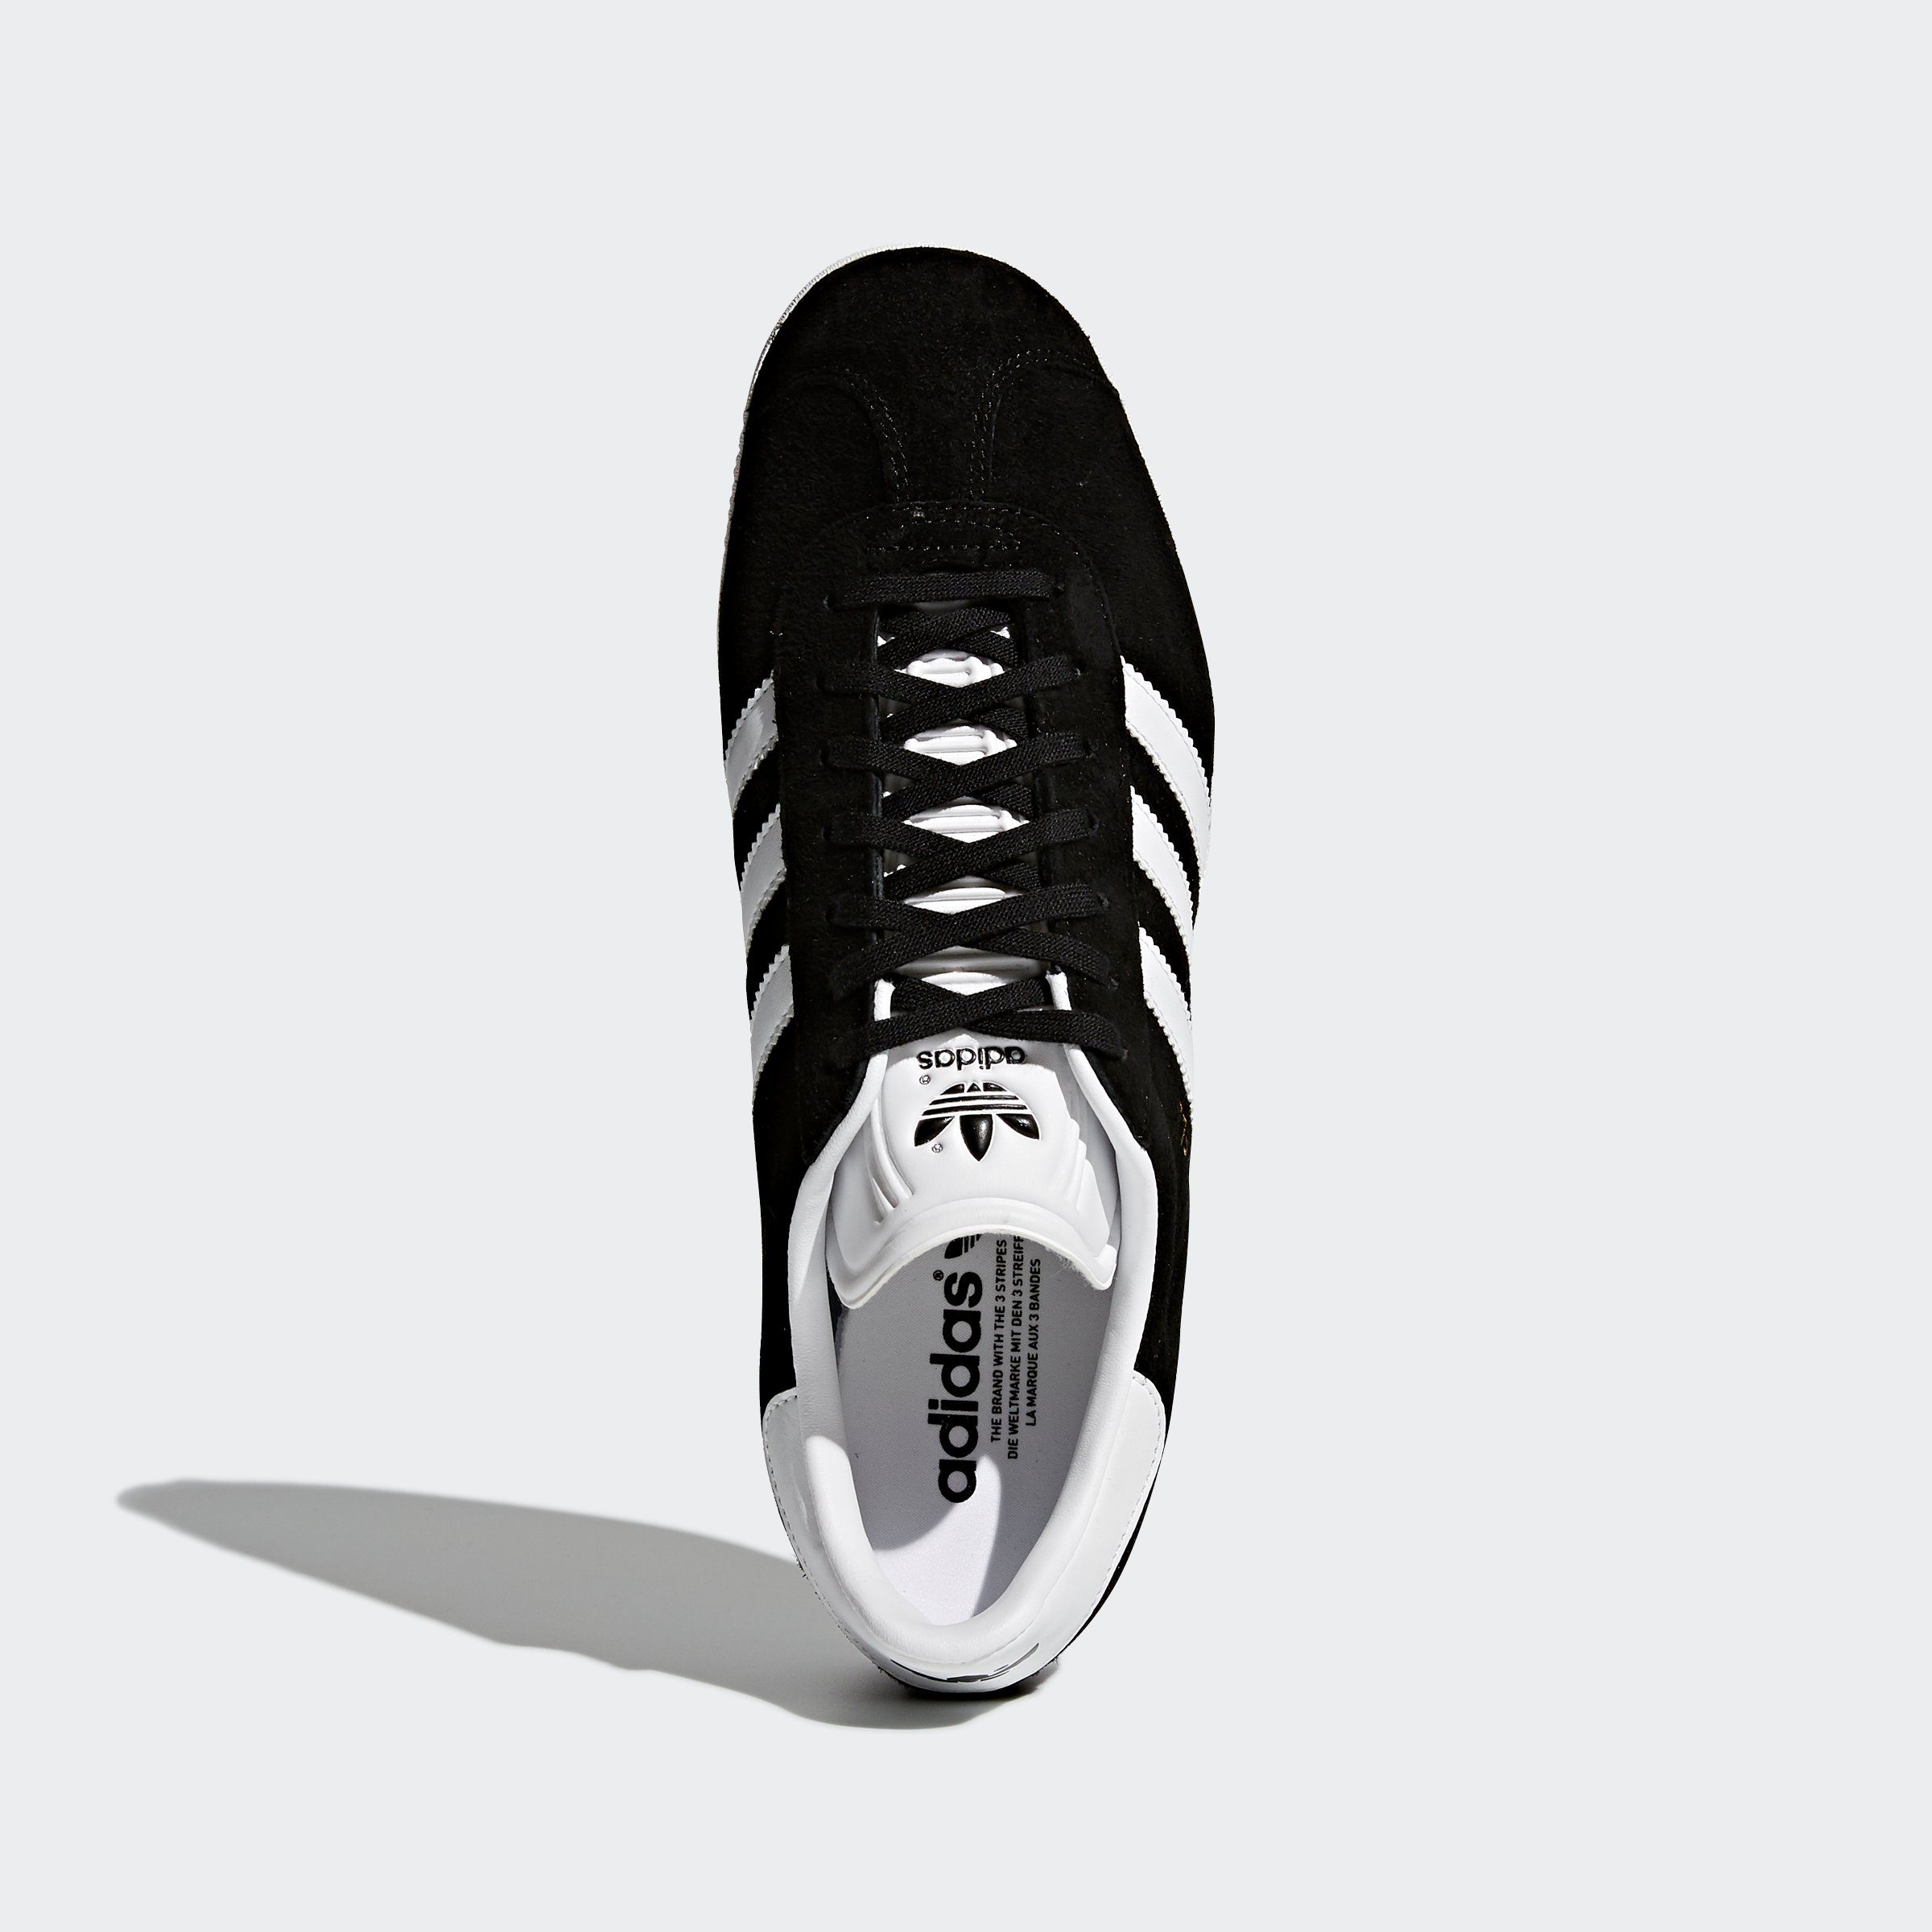 Sneaker CBLACK-WHITE-GOLDMT Originals adidas GAZELLE